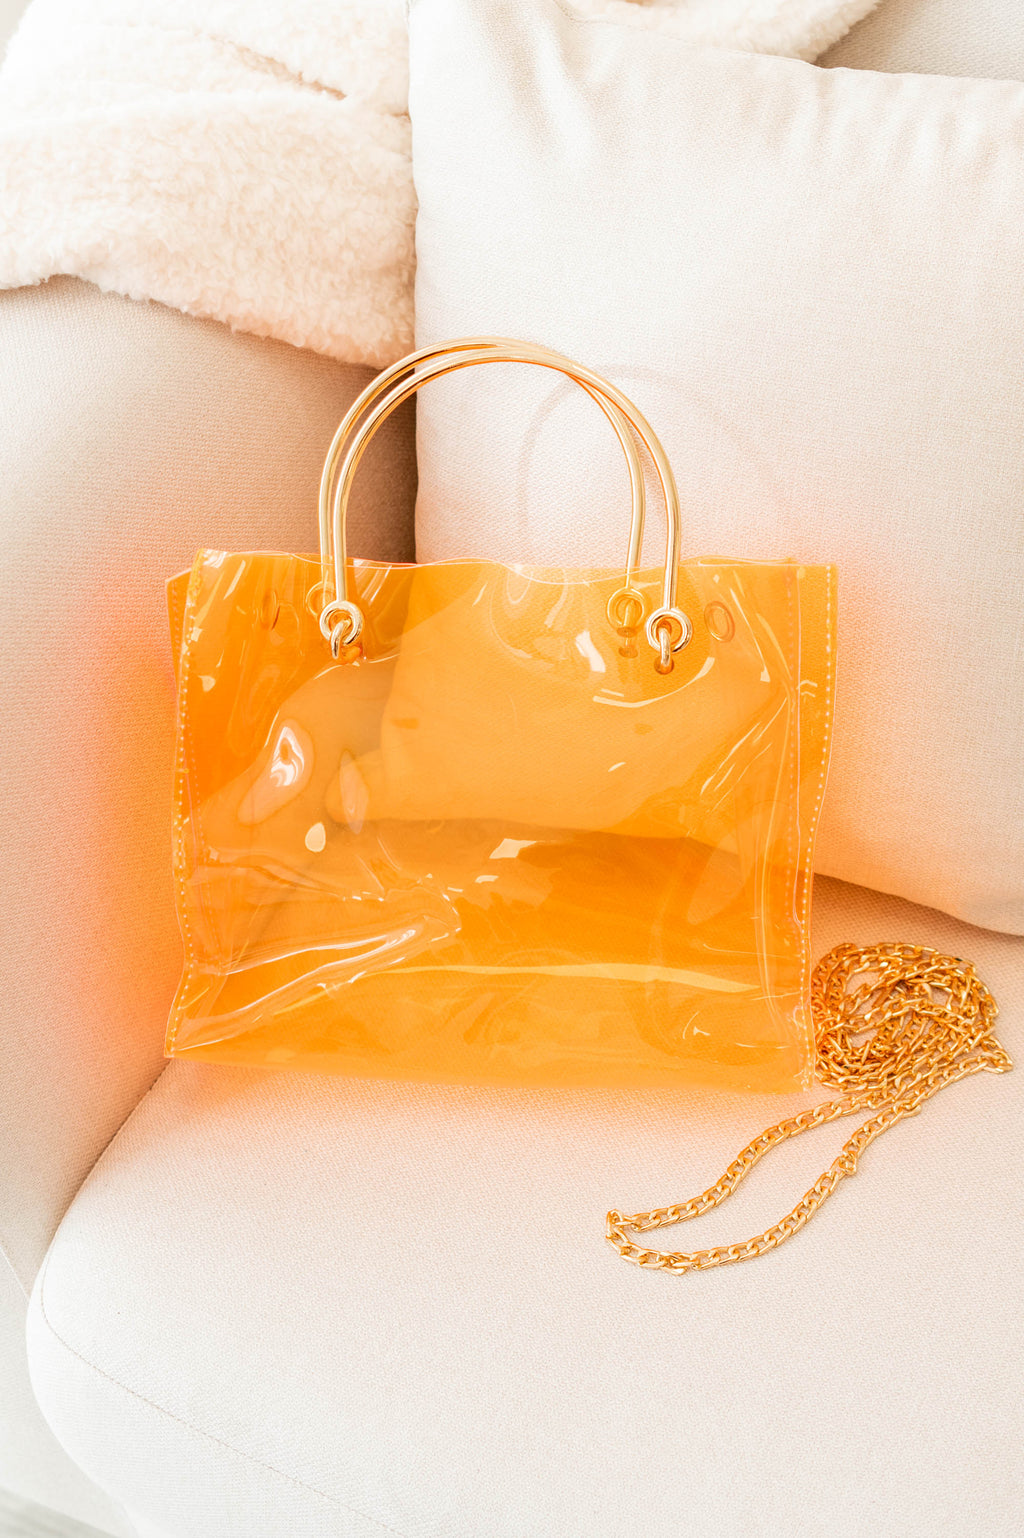 Nanette Lepore Handbag 3 Piece Set! Beautiful Purse! Brand New With Tags! |  eBay